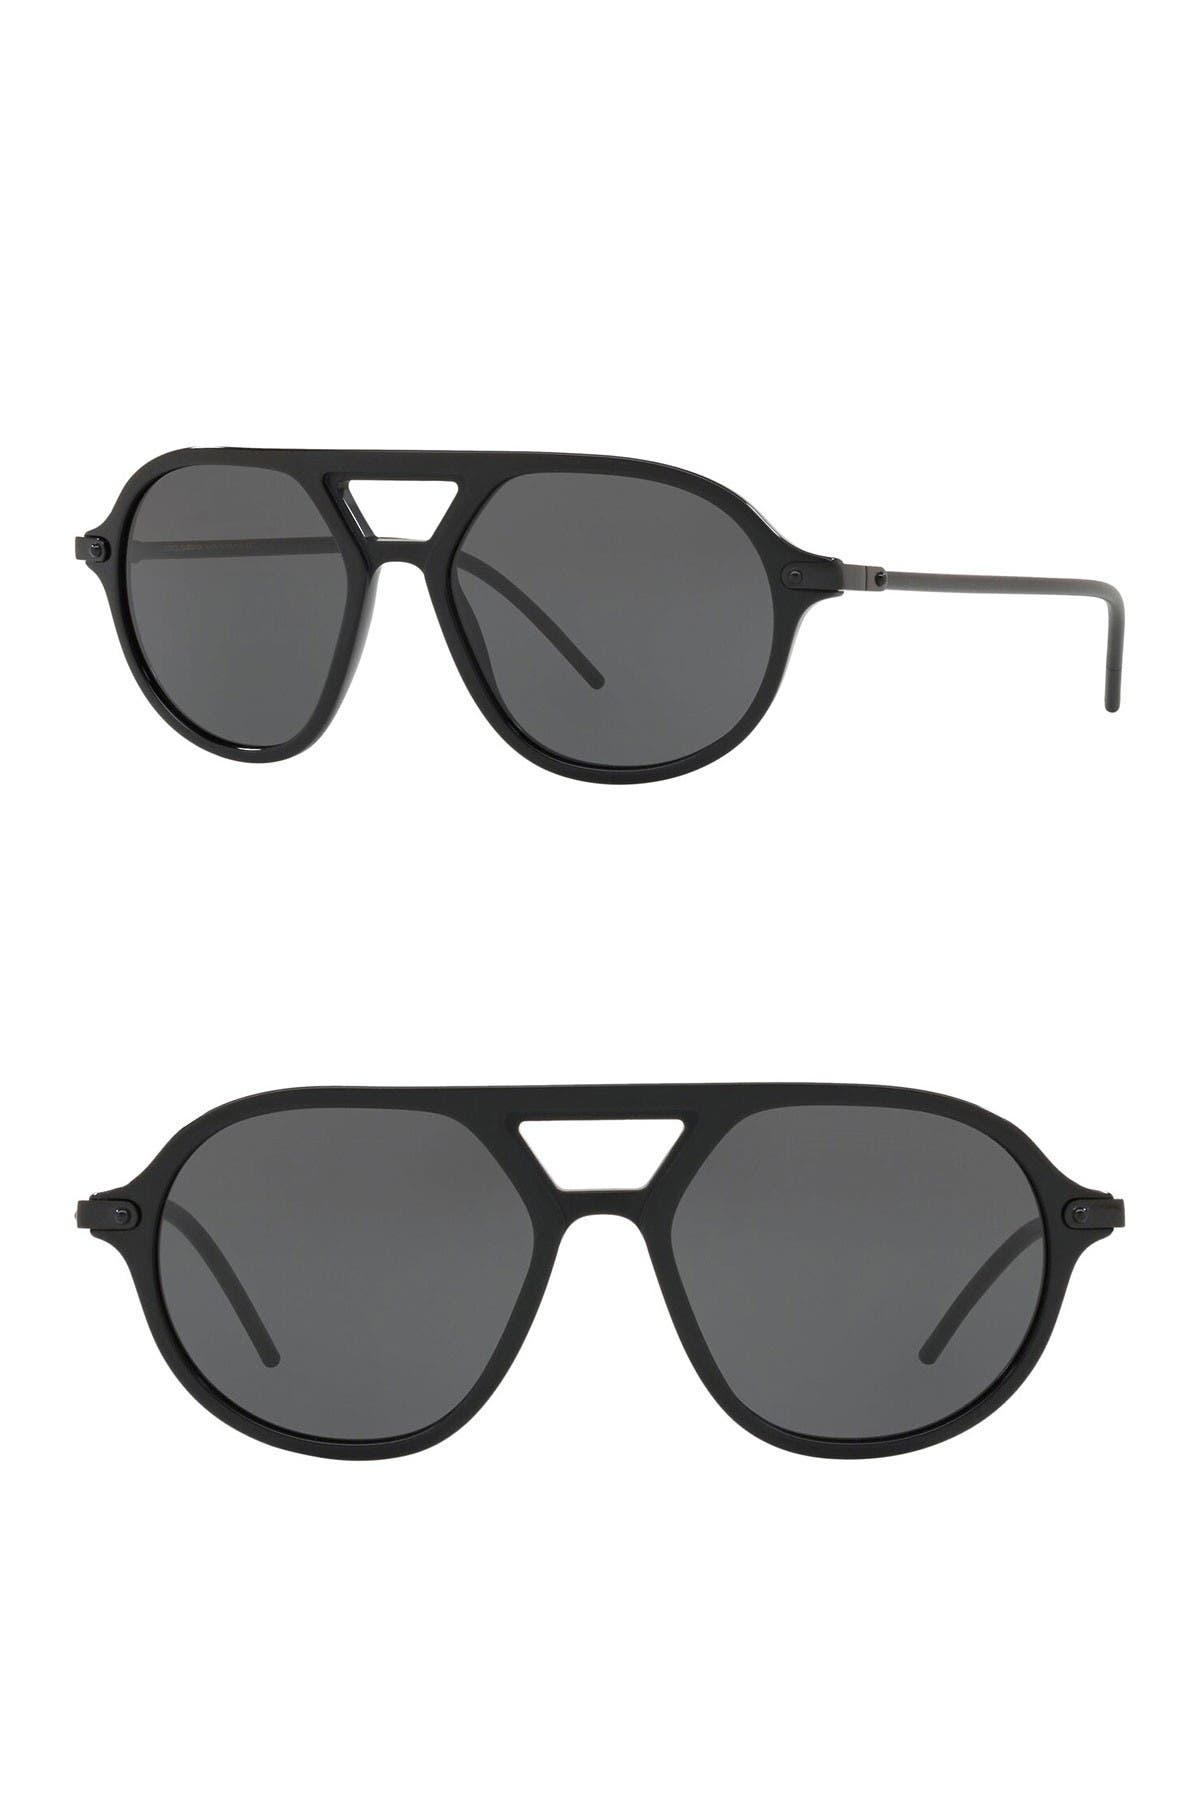 dolce & gabbana 54mm square full rim sunglasses